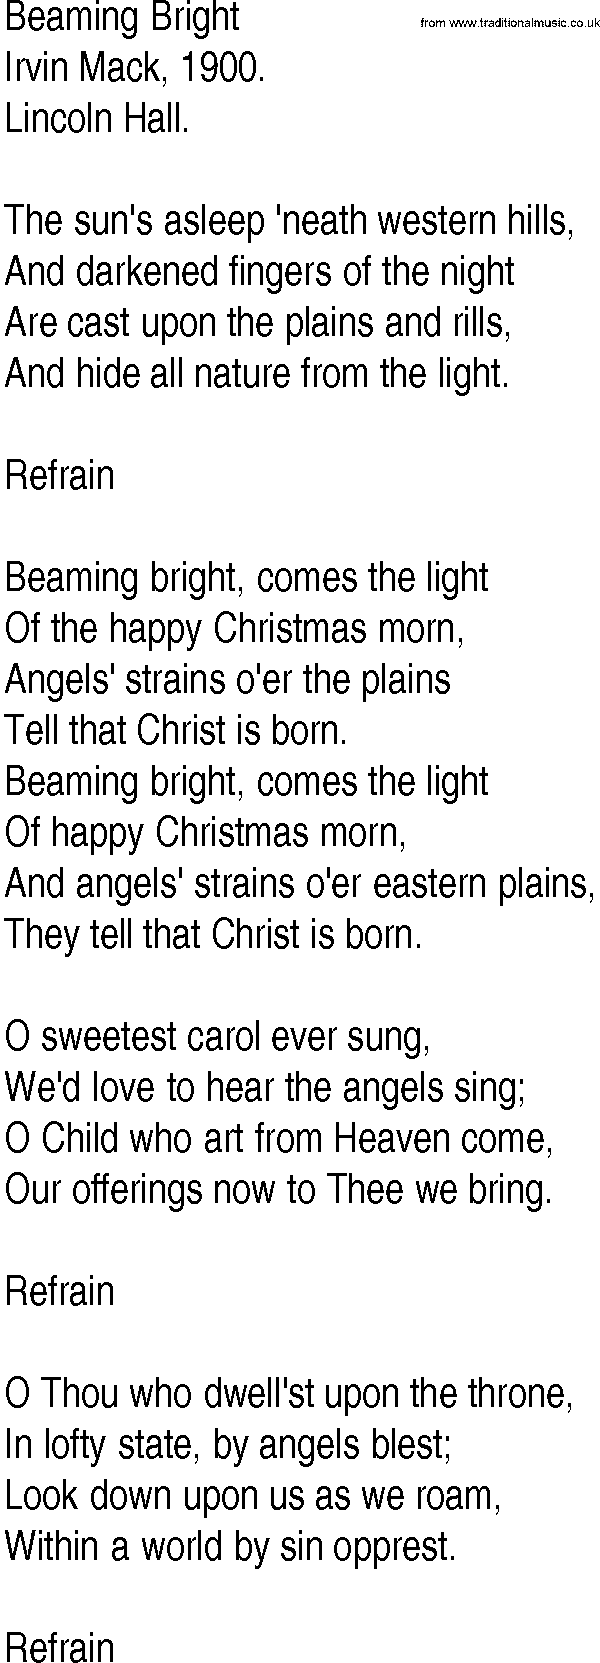 Hymn and Gospel Song: Beaming Bright by Irvin Mack lyrics